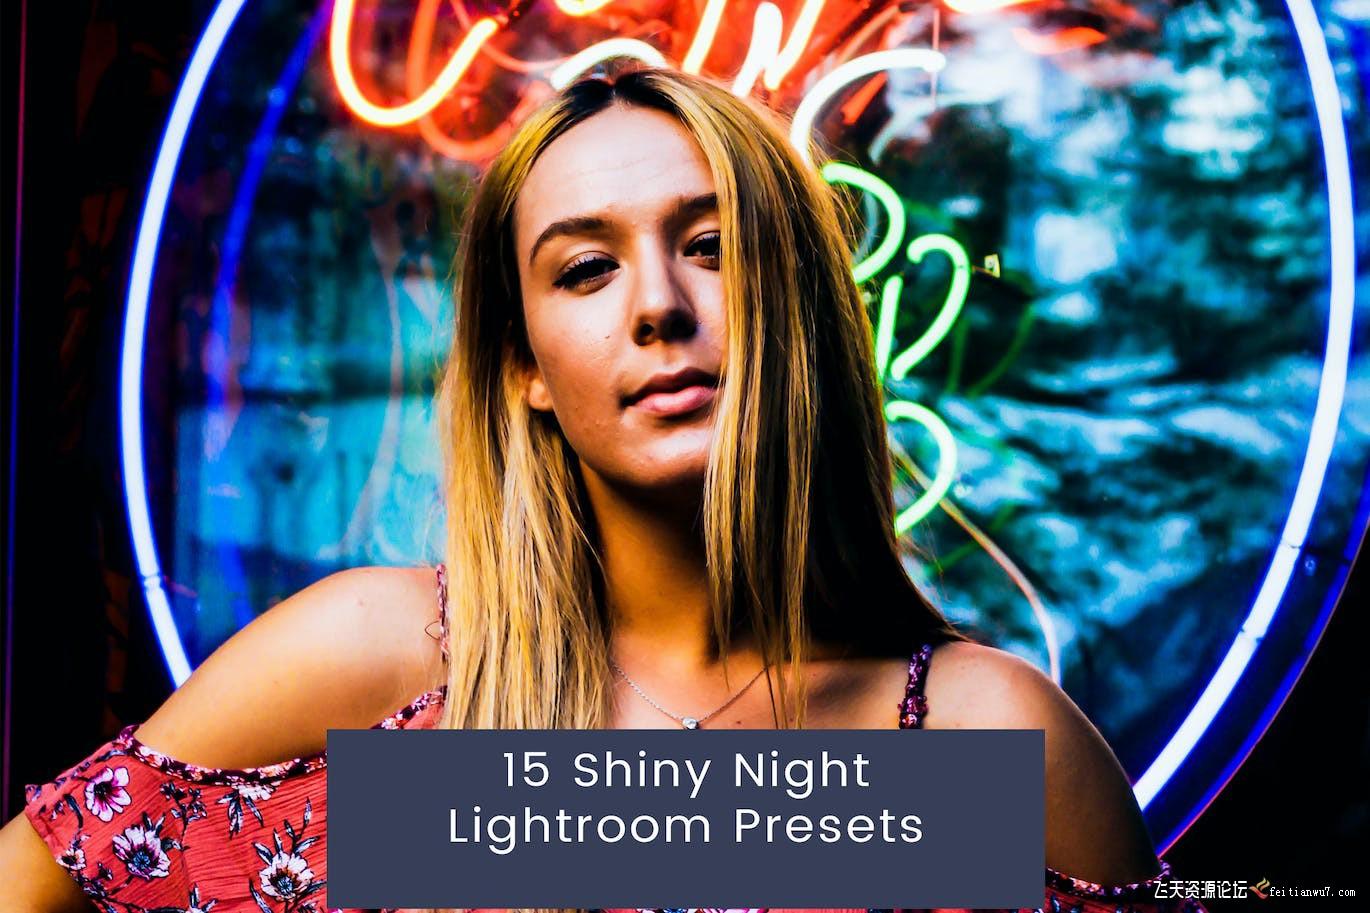 城市夜景风光人像Lightroom预设 15 Shiny Night Lightroom Presets插图